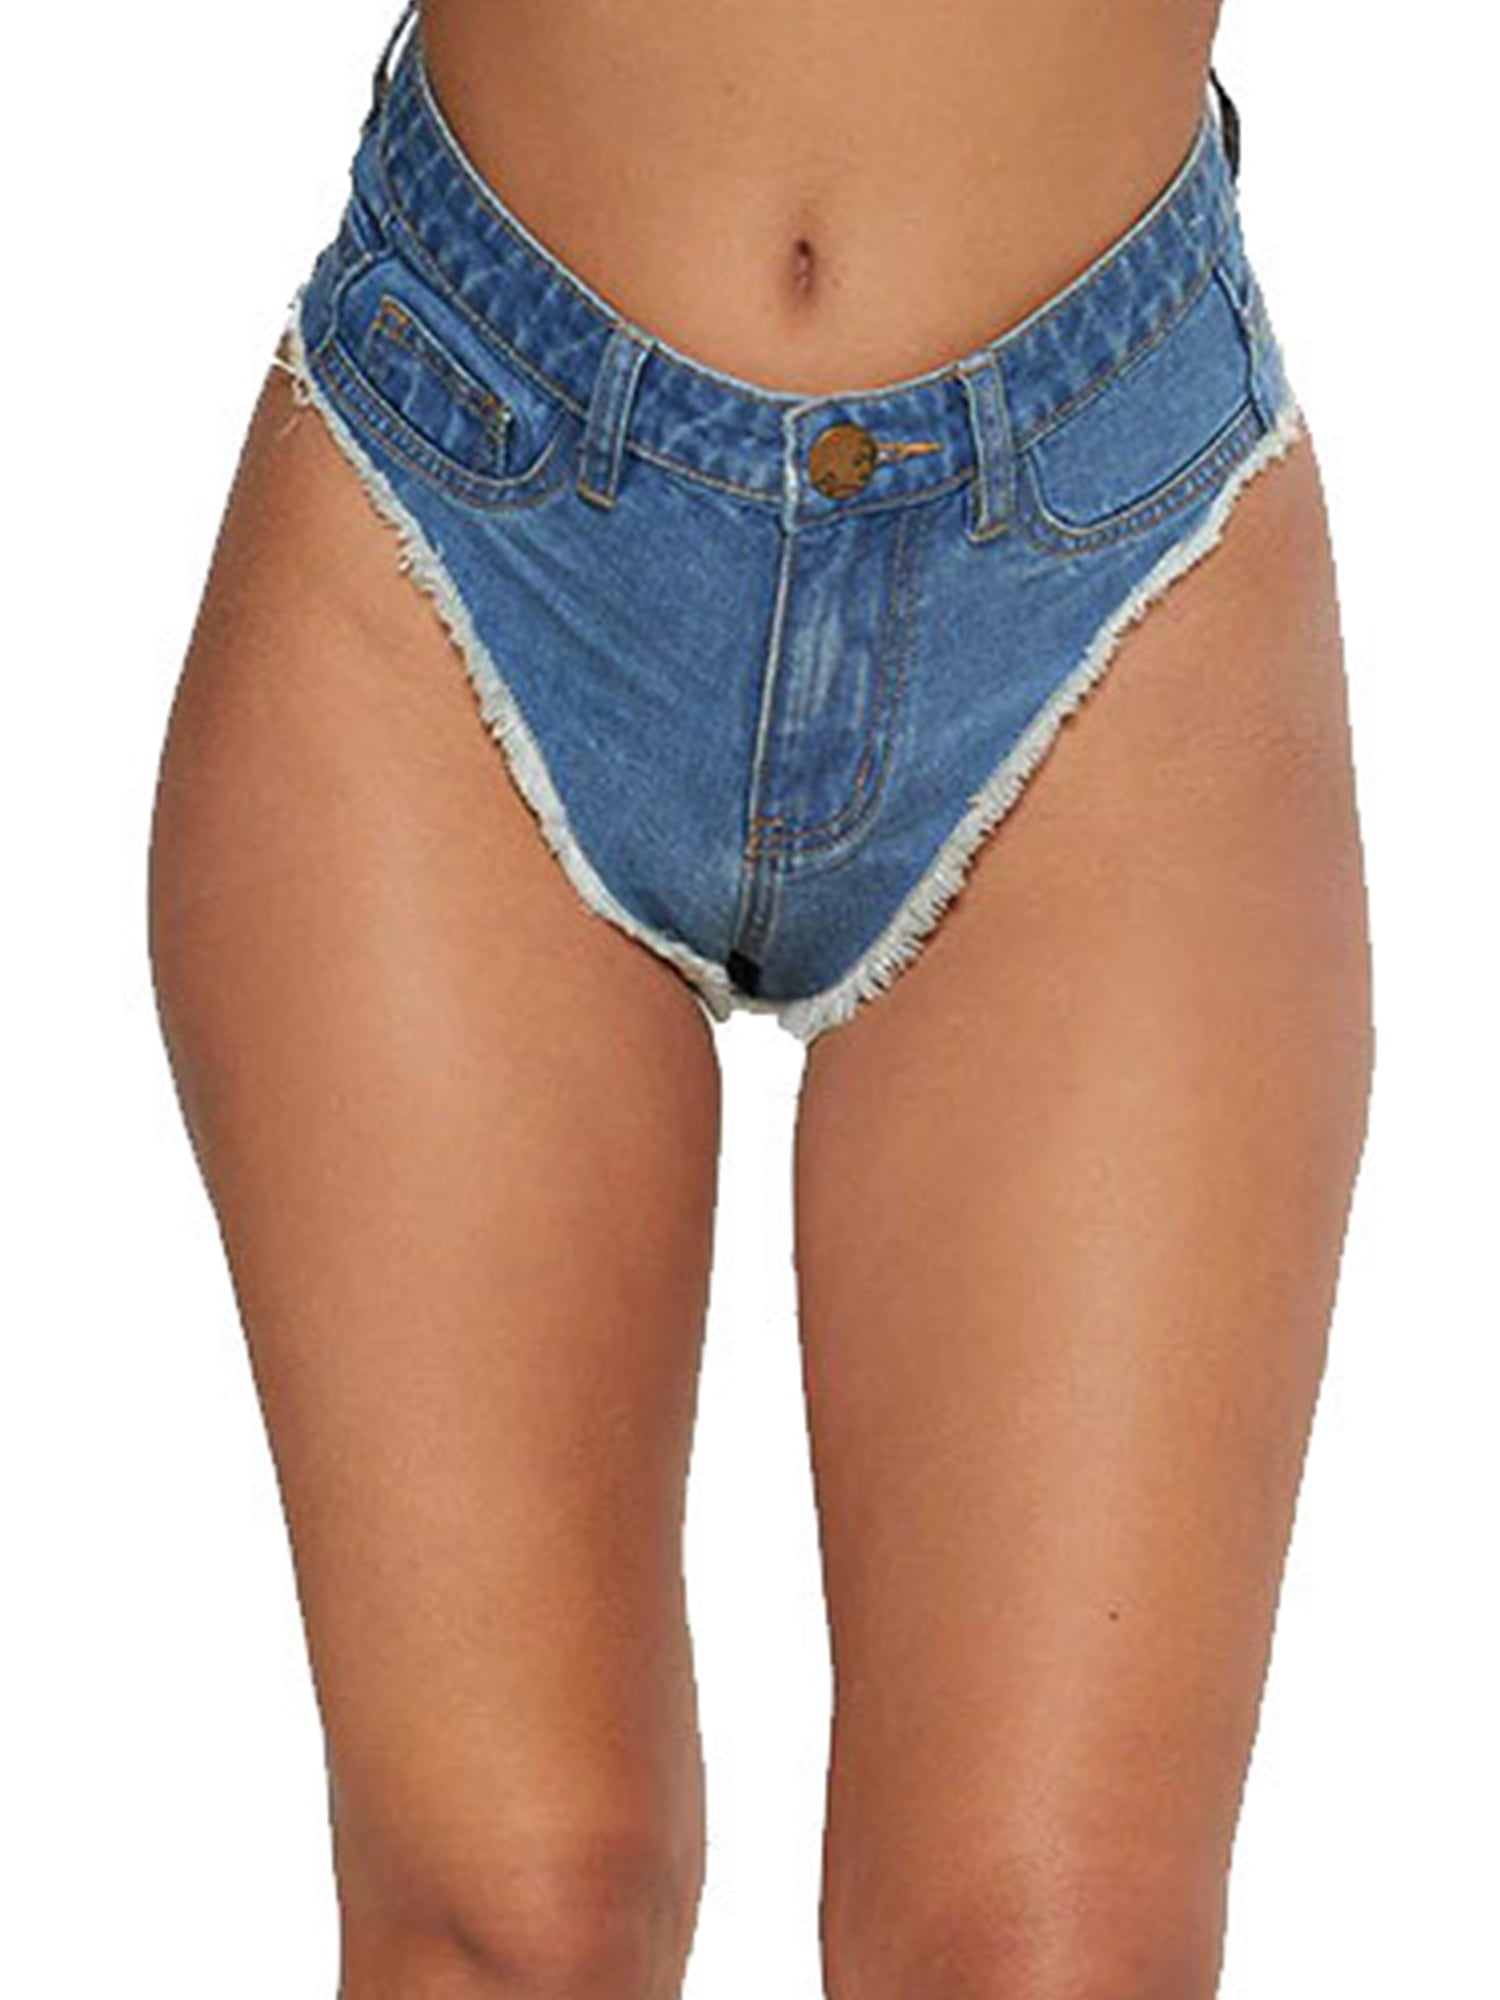 UUYUK Women Pockets with Tassles Slim Cutoff Ripped Summer Denim Shorts Jeans Hot Pants